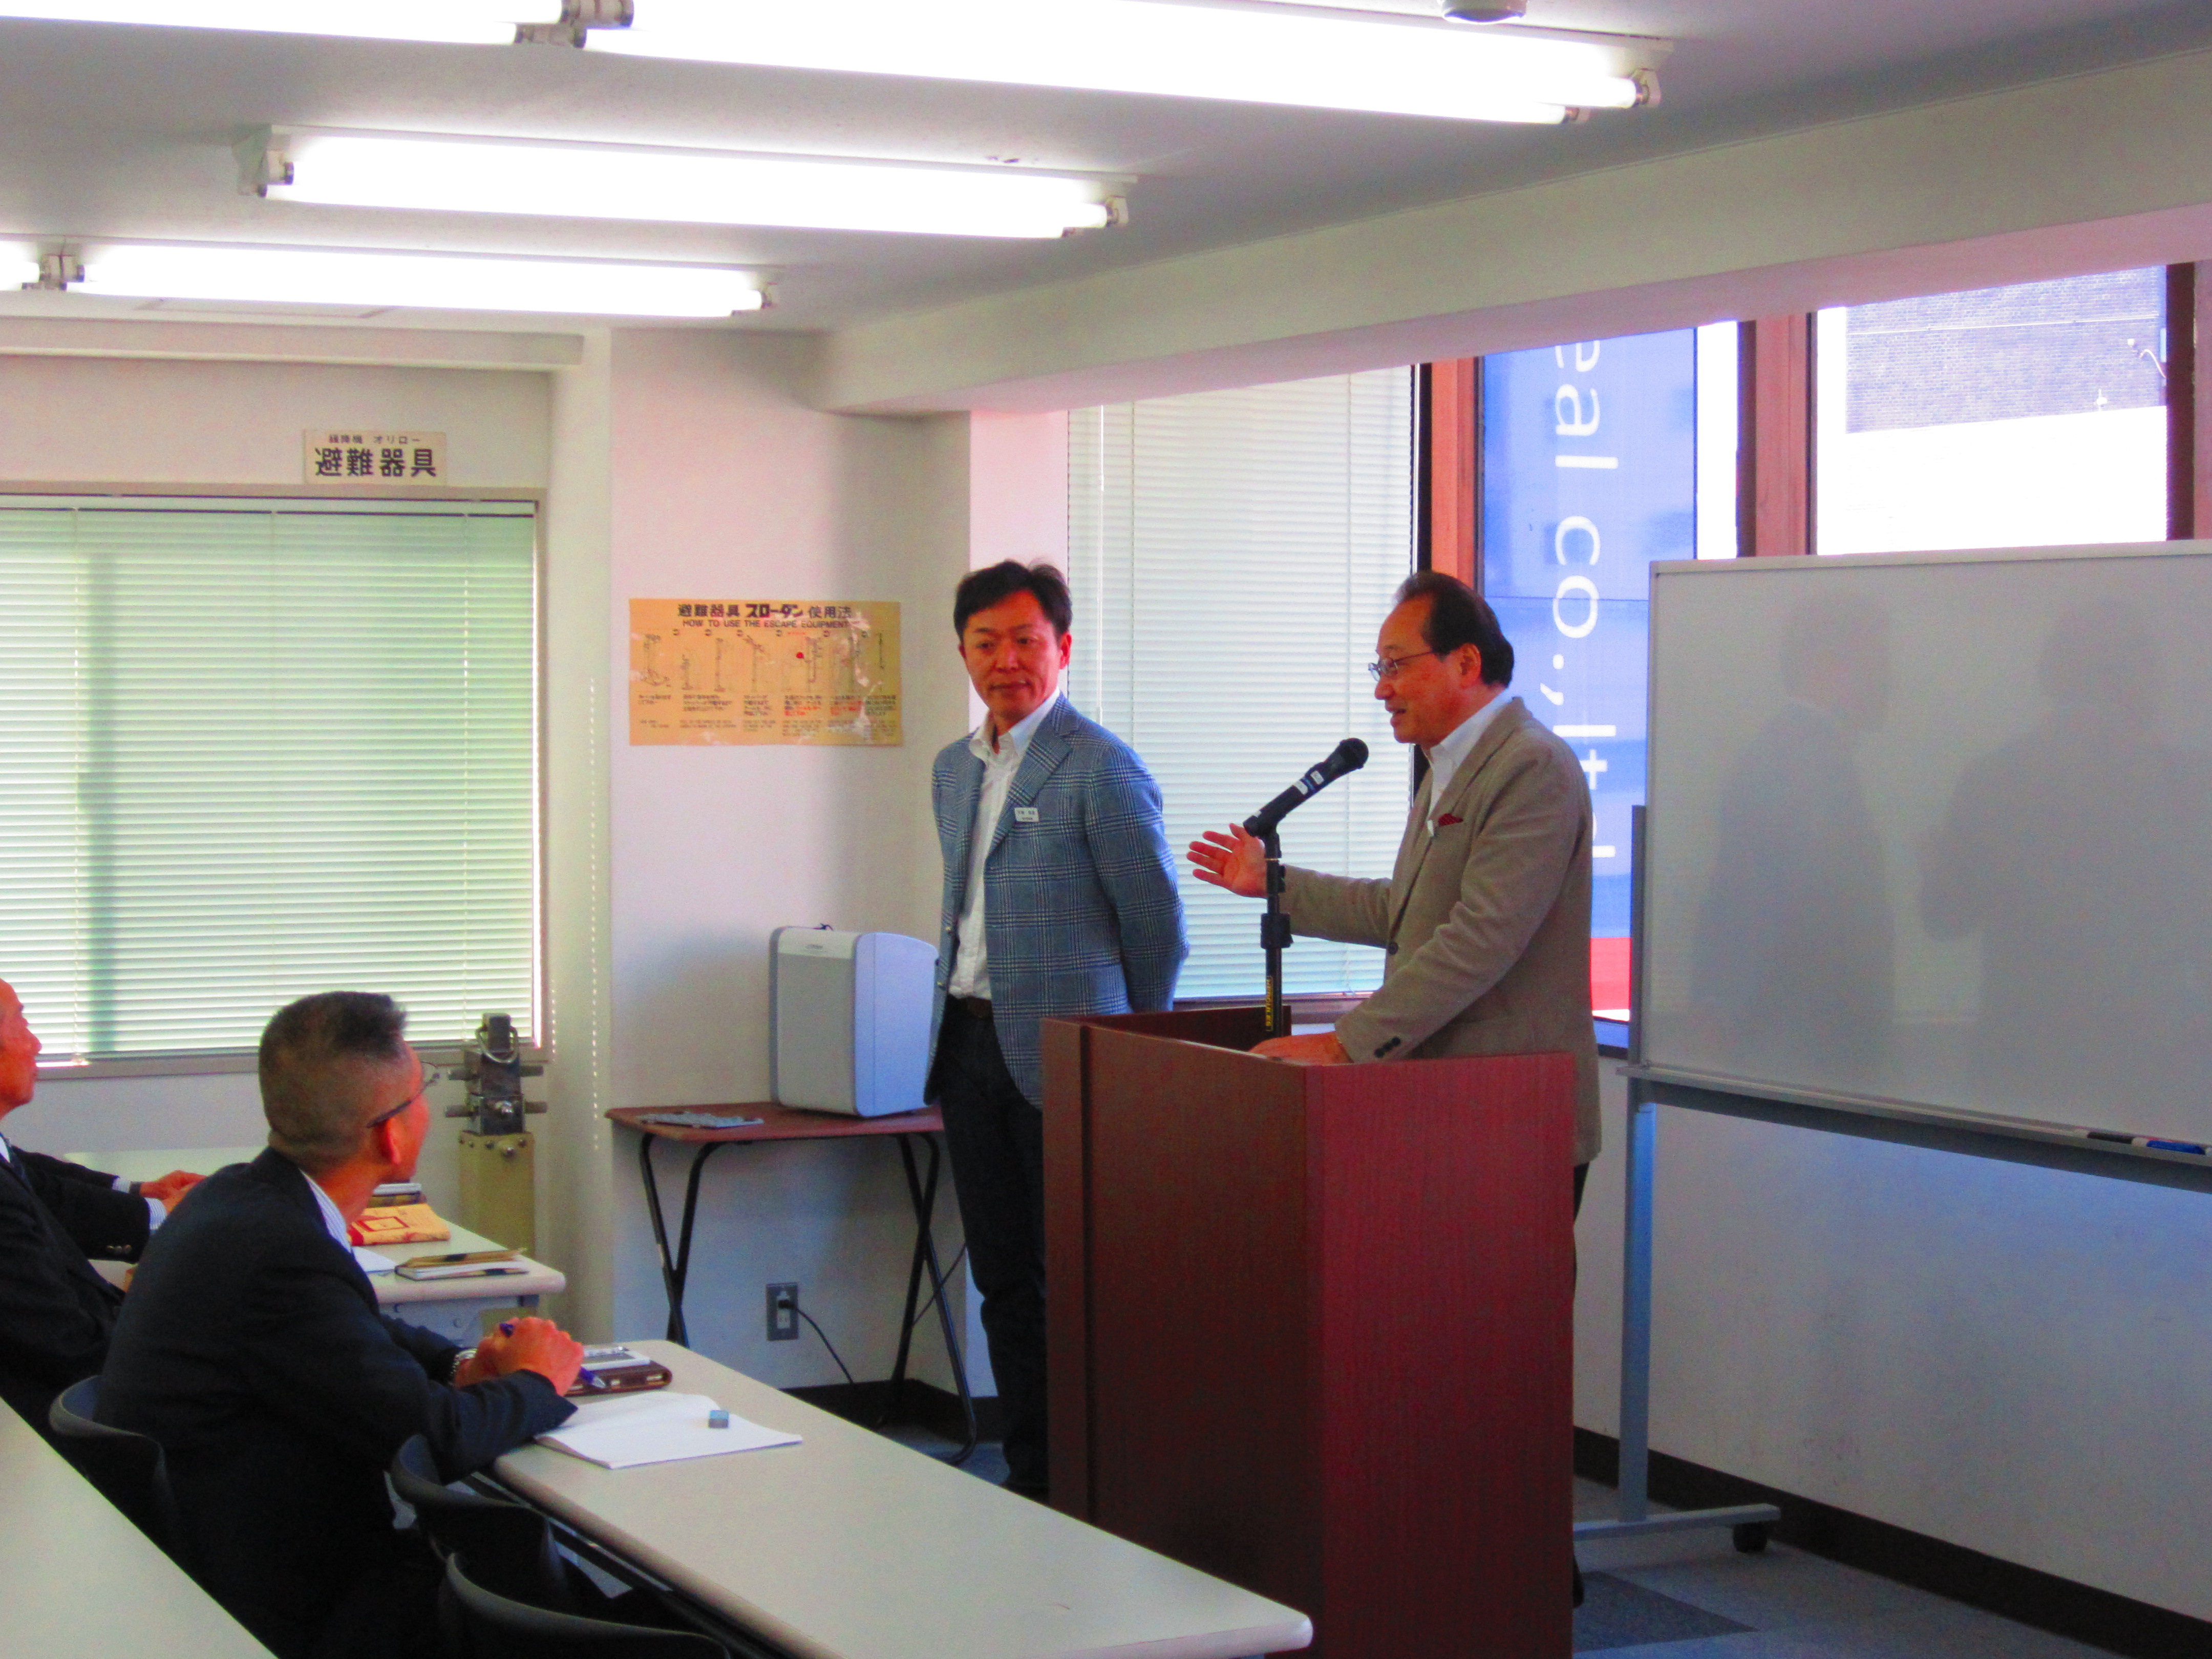 IMG 5585 - ４月１日東京思風塾の開催になります。